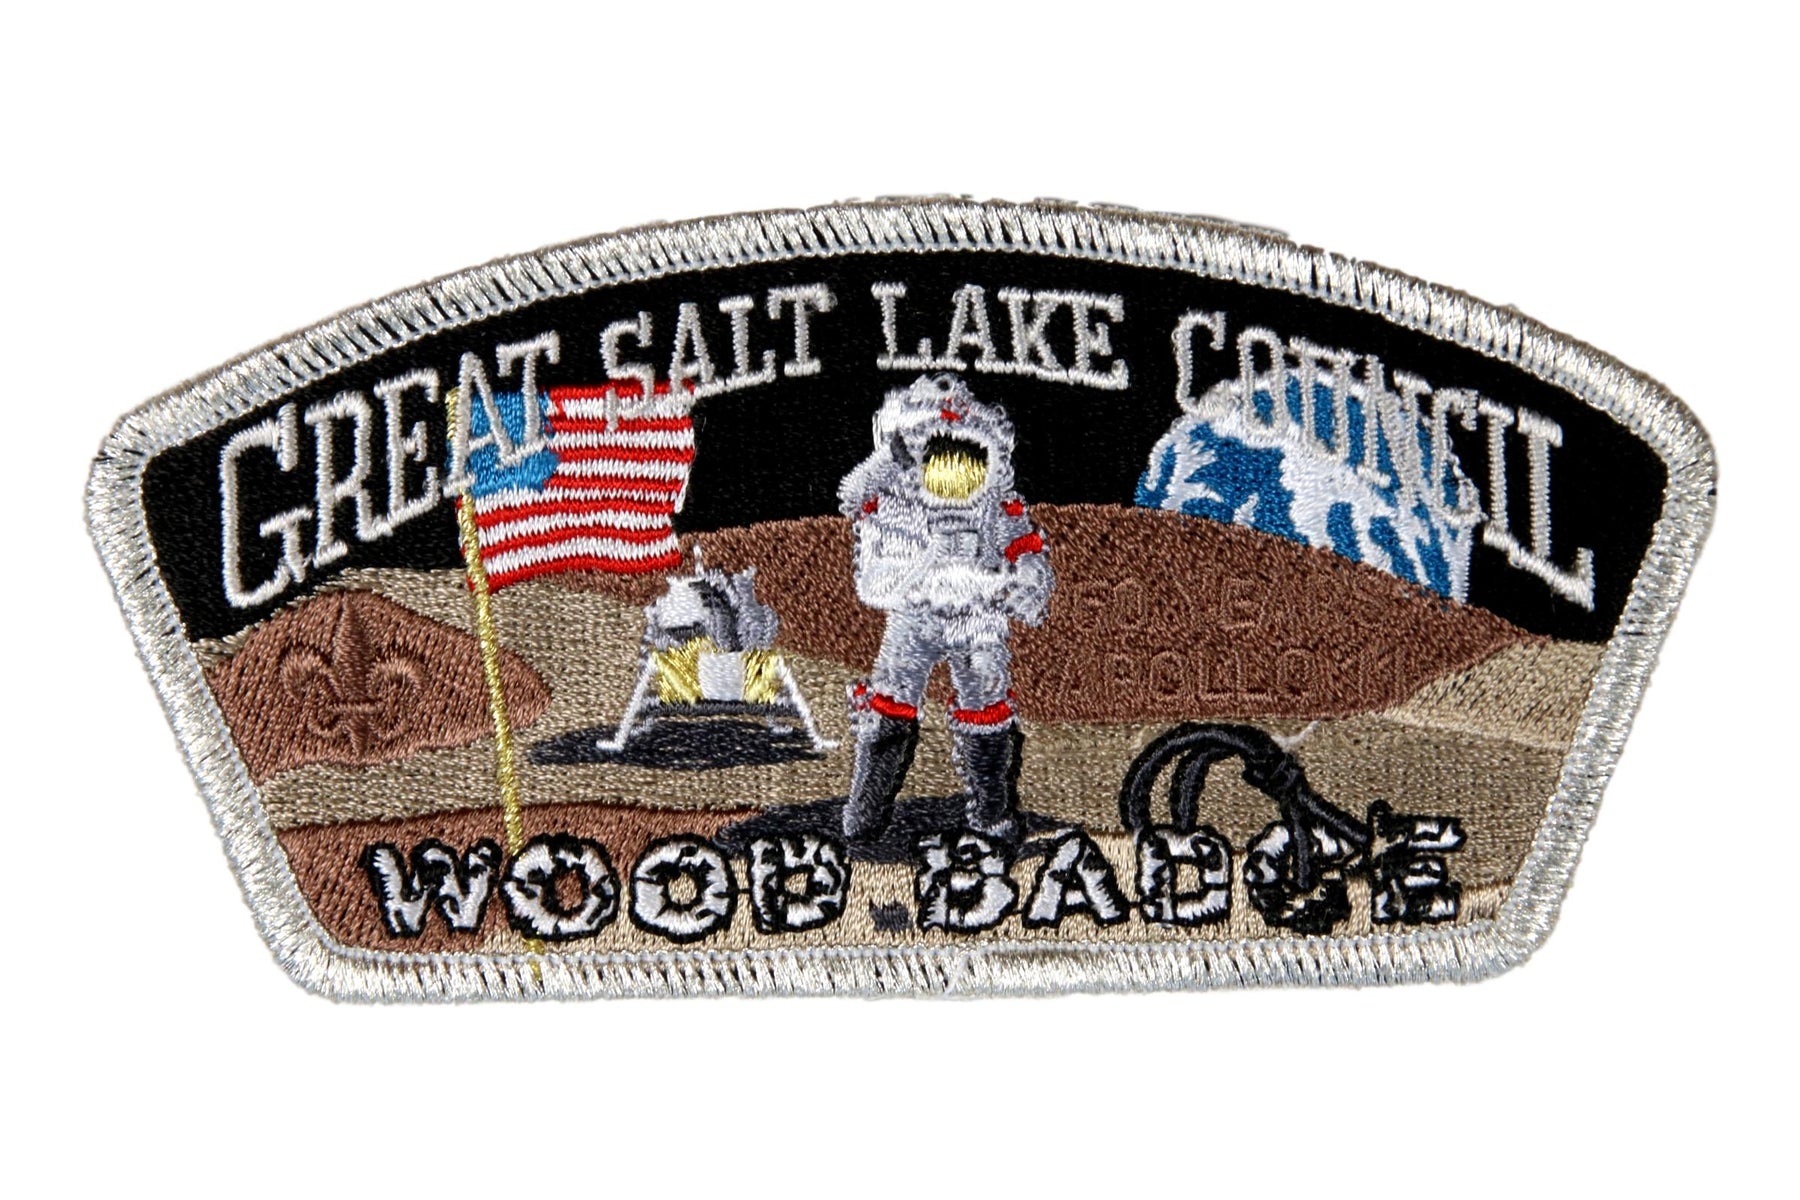 Great Salt Lake CSP SA-383 2019 Wood Badge